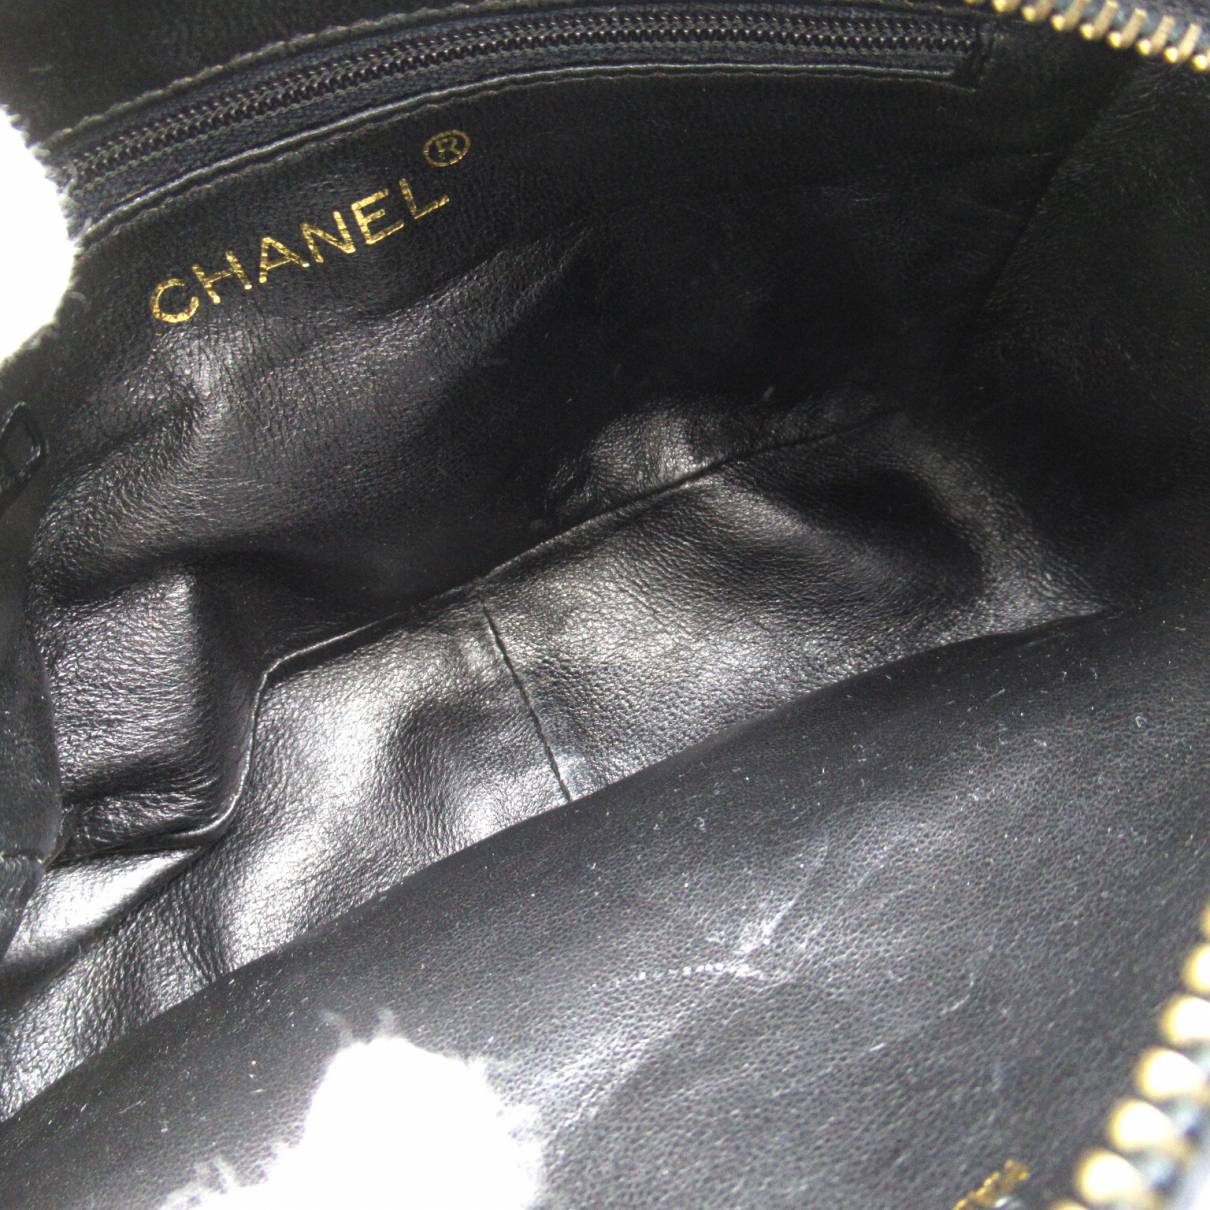 Leather handbag Chanel - Vintage